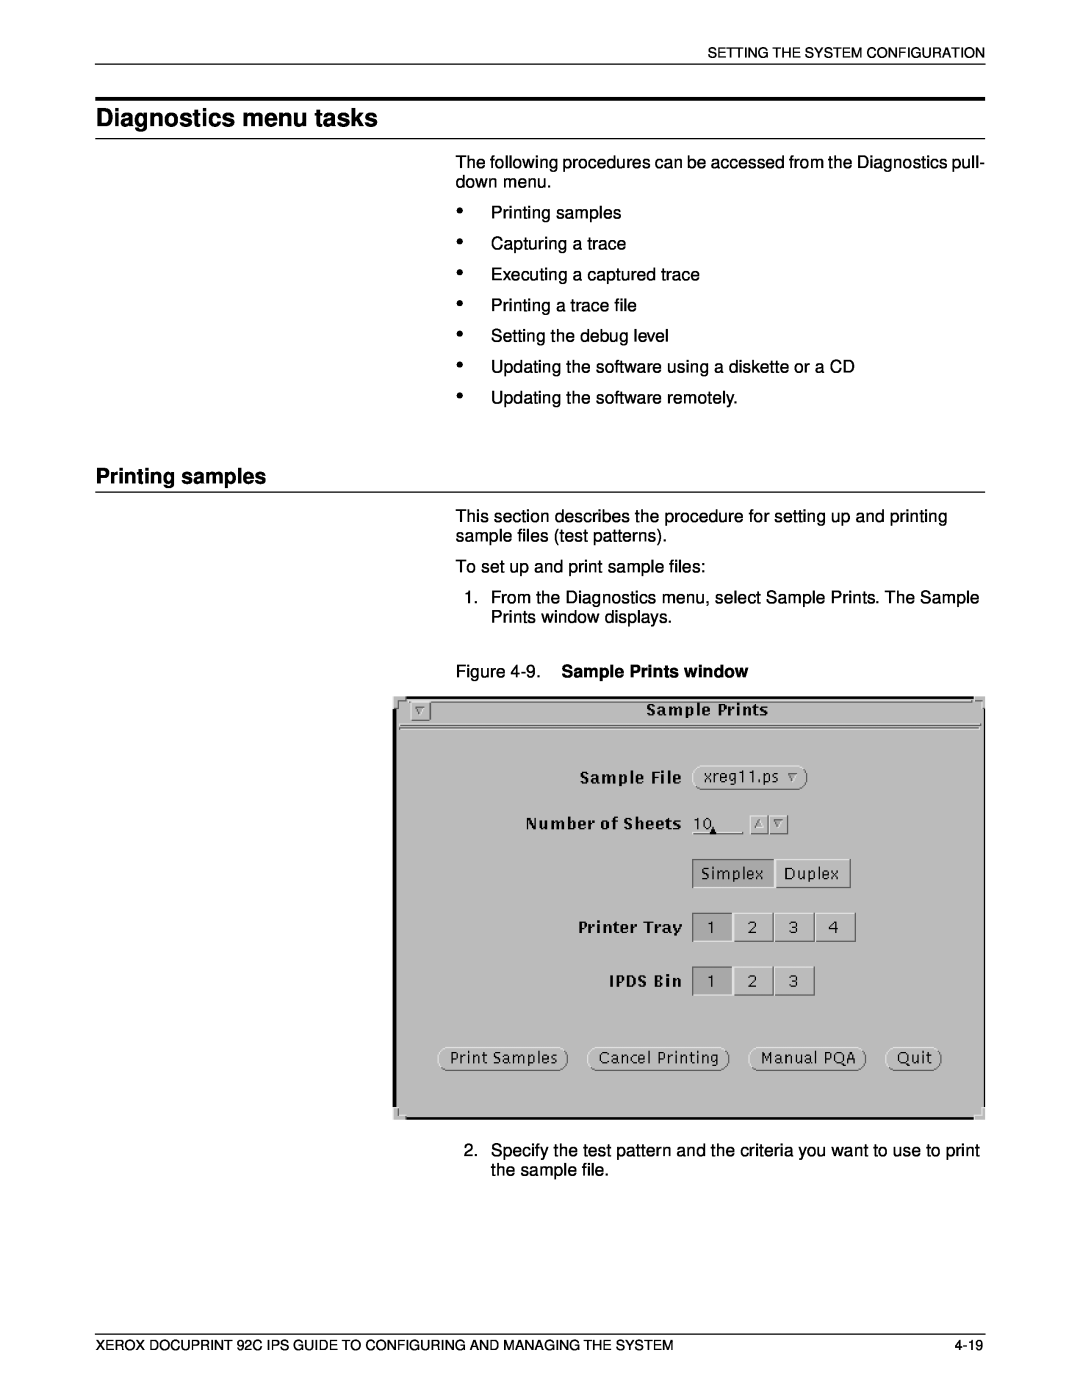 Xerox 92C IPS manual Diagnostics menu tasks, Printing samples, 9. Sample Prints window 